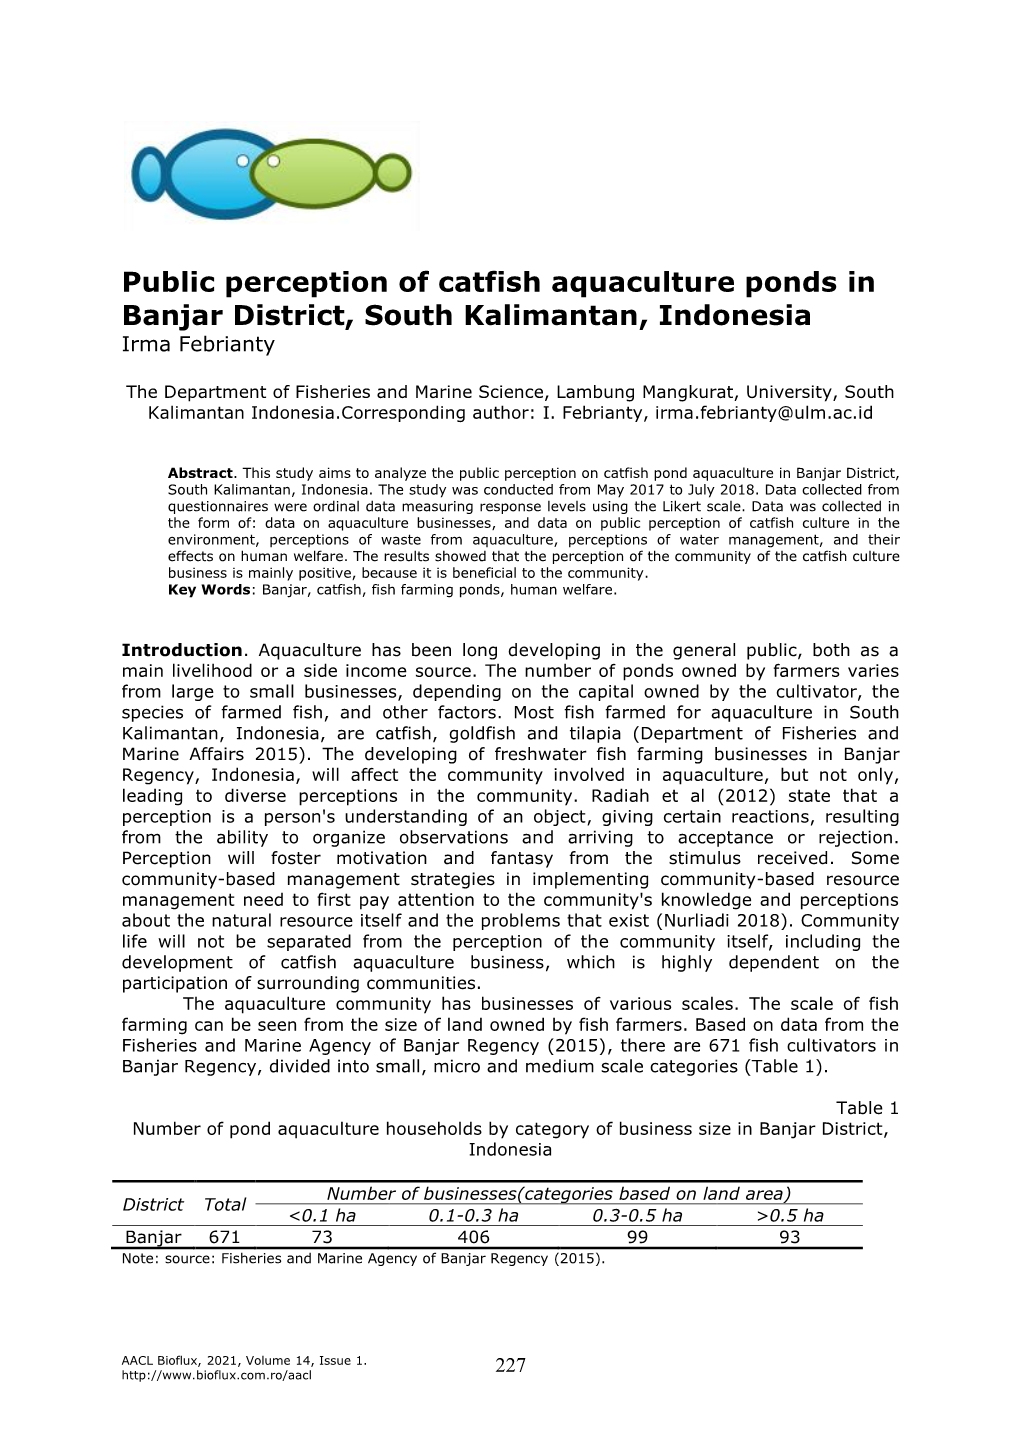 Febrianty I., 2021 Public Perception of Catfish Aquaculture Ponds in Banjar District, South Kalimantan, Indonesia